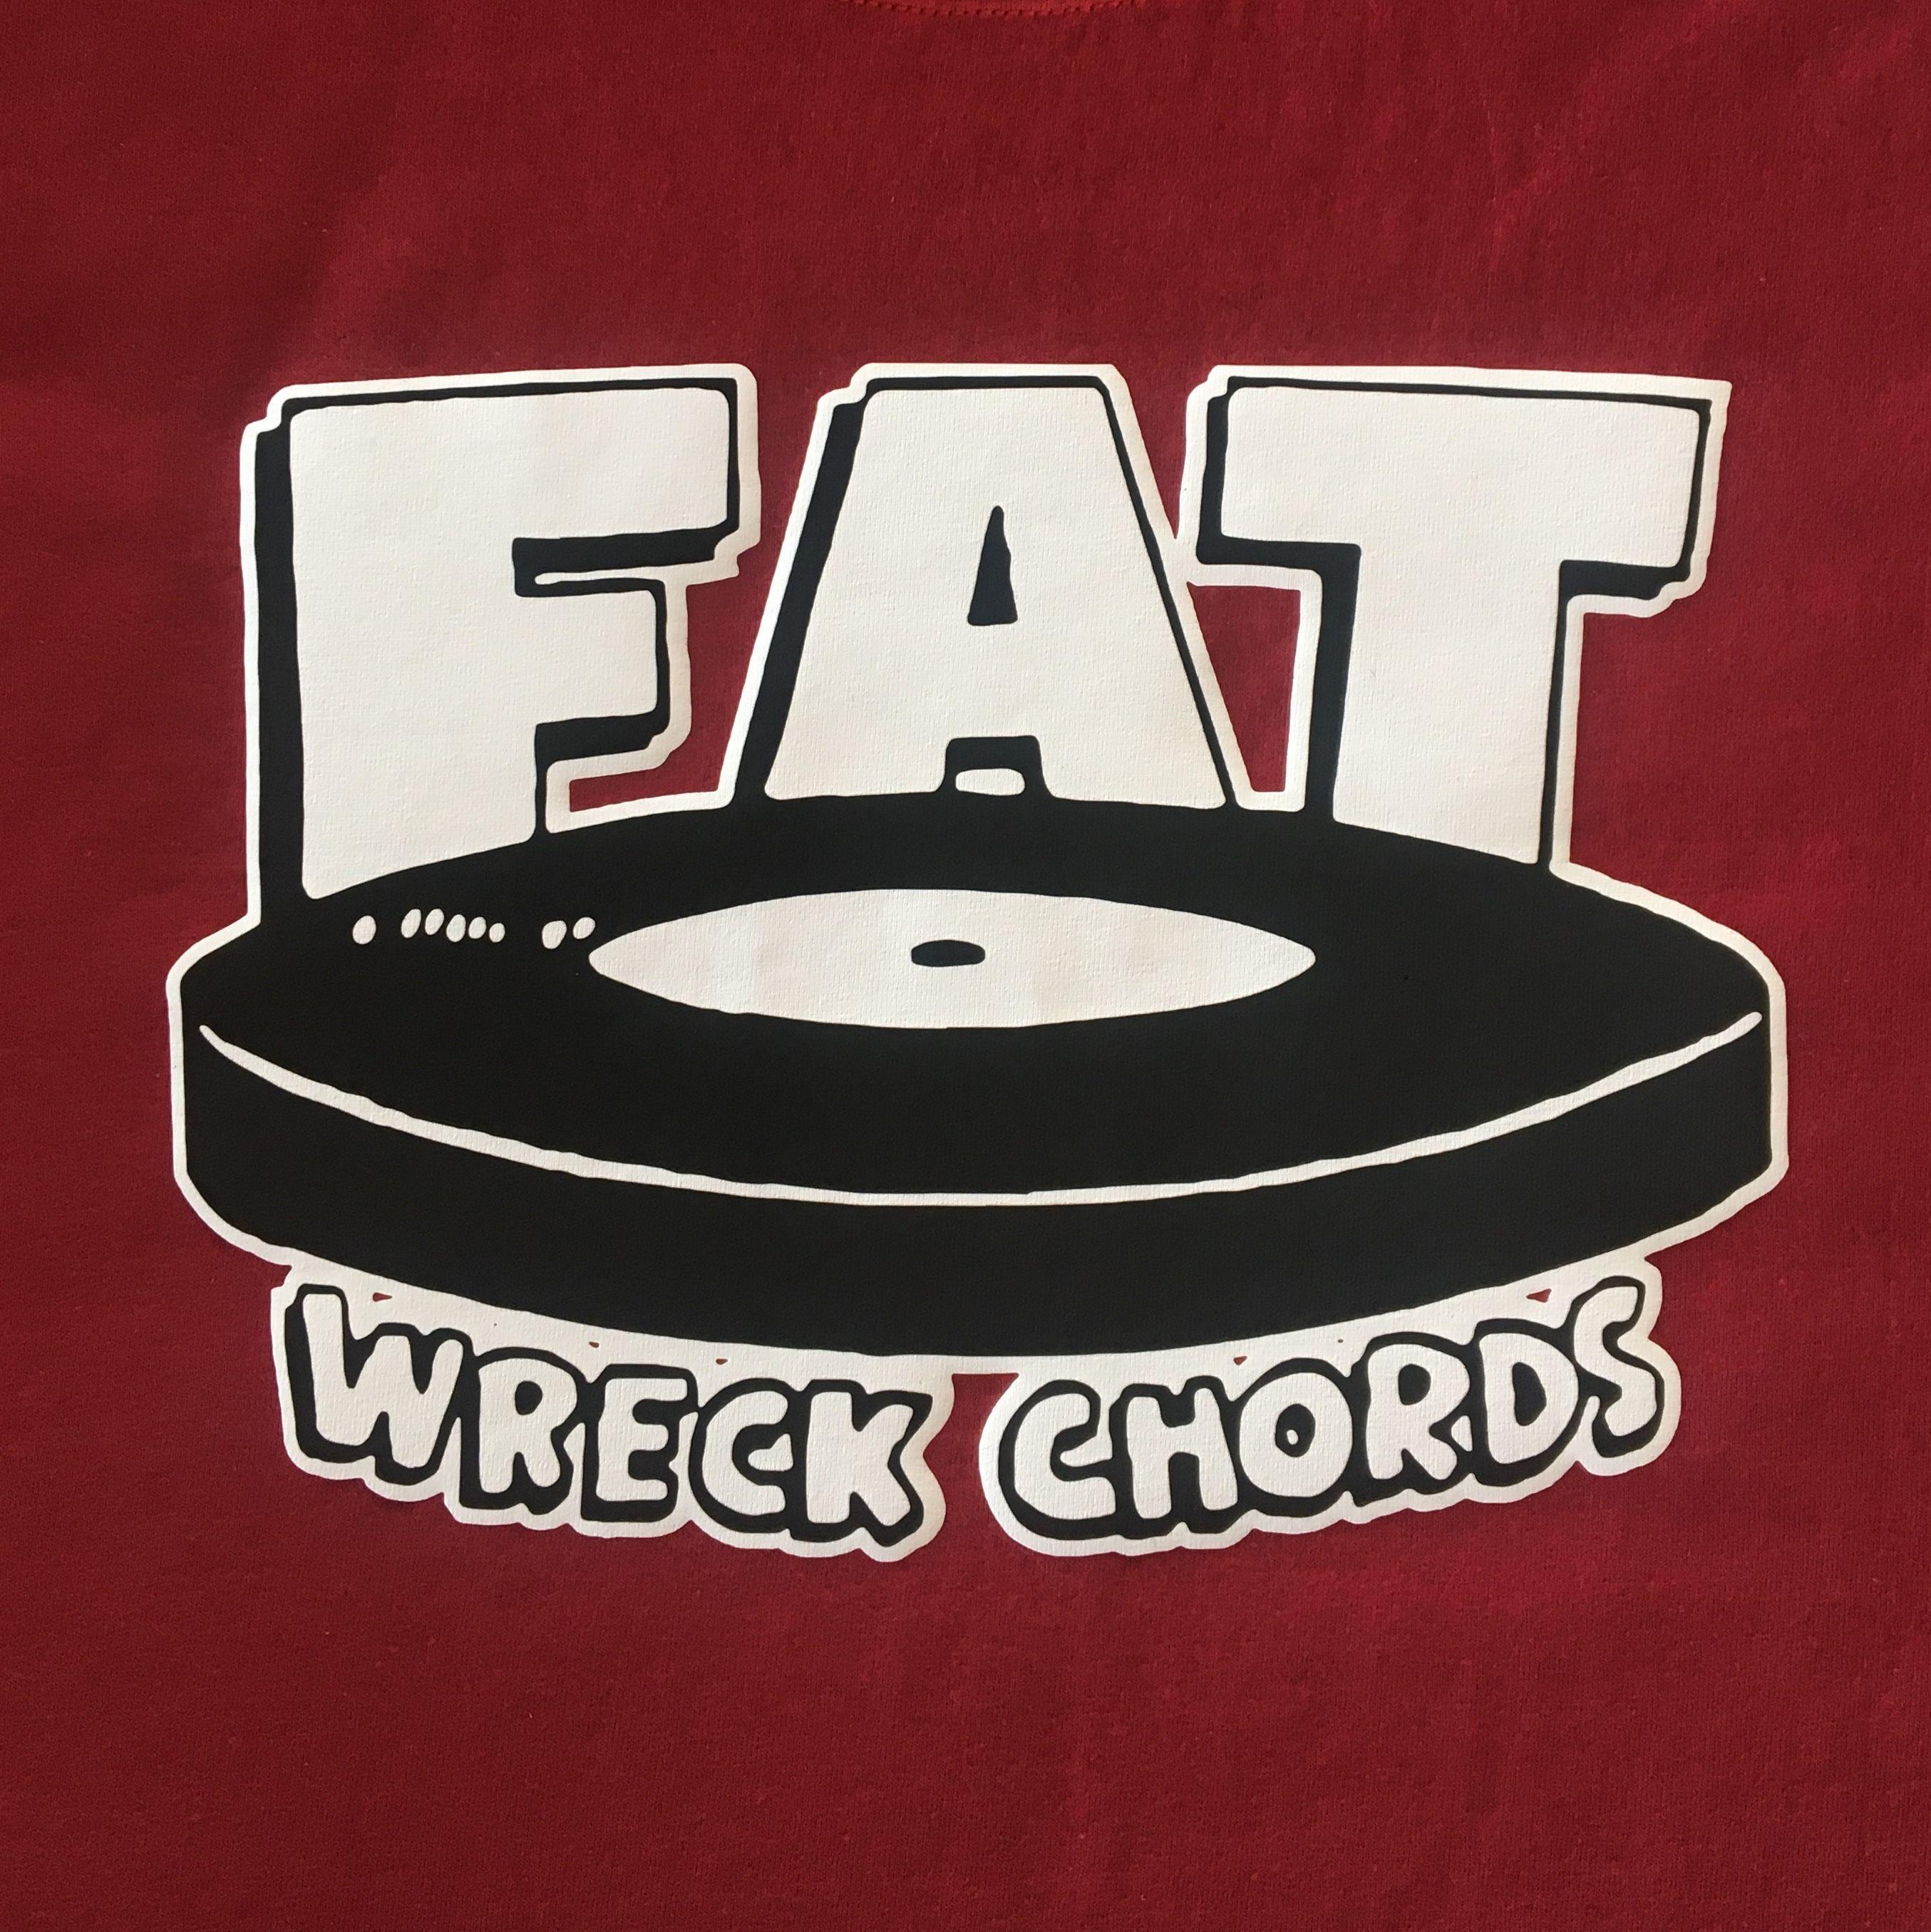 Wreck Logo - Fat Wreck Chords | DIY shirts | Diy shirt, Logos, Chevrolet logo